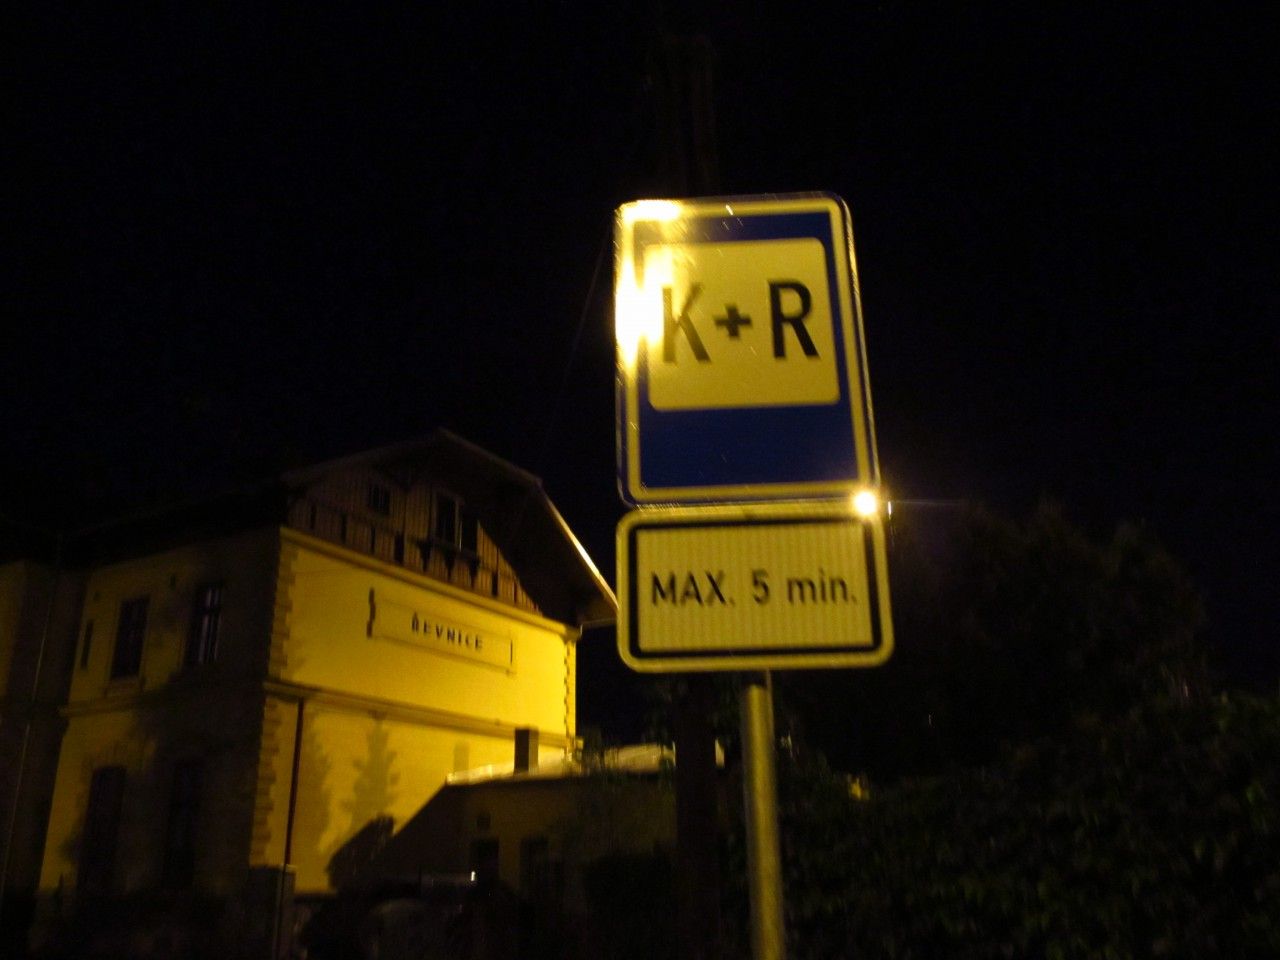 Jasn vyznaen - K + R = parkovn max. na 5 minut